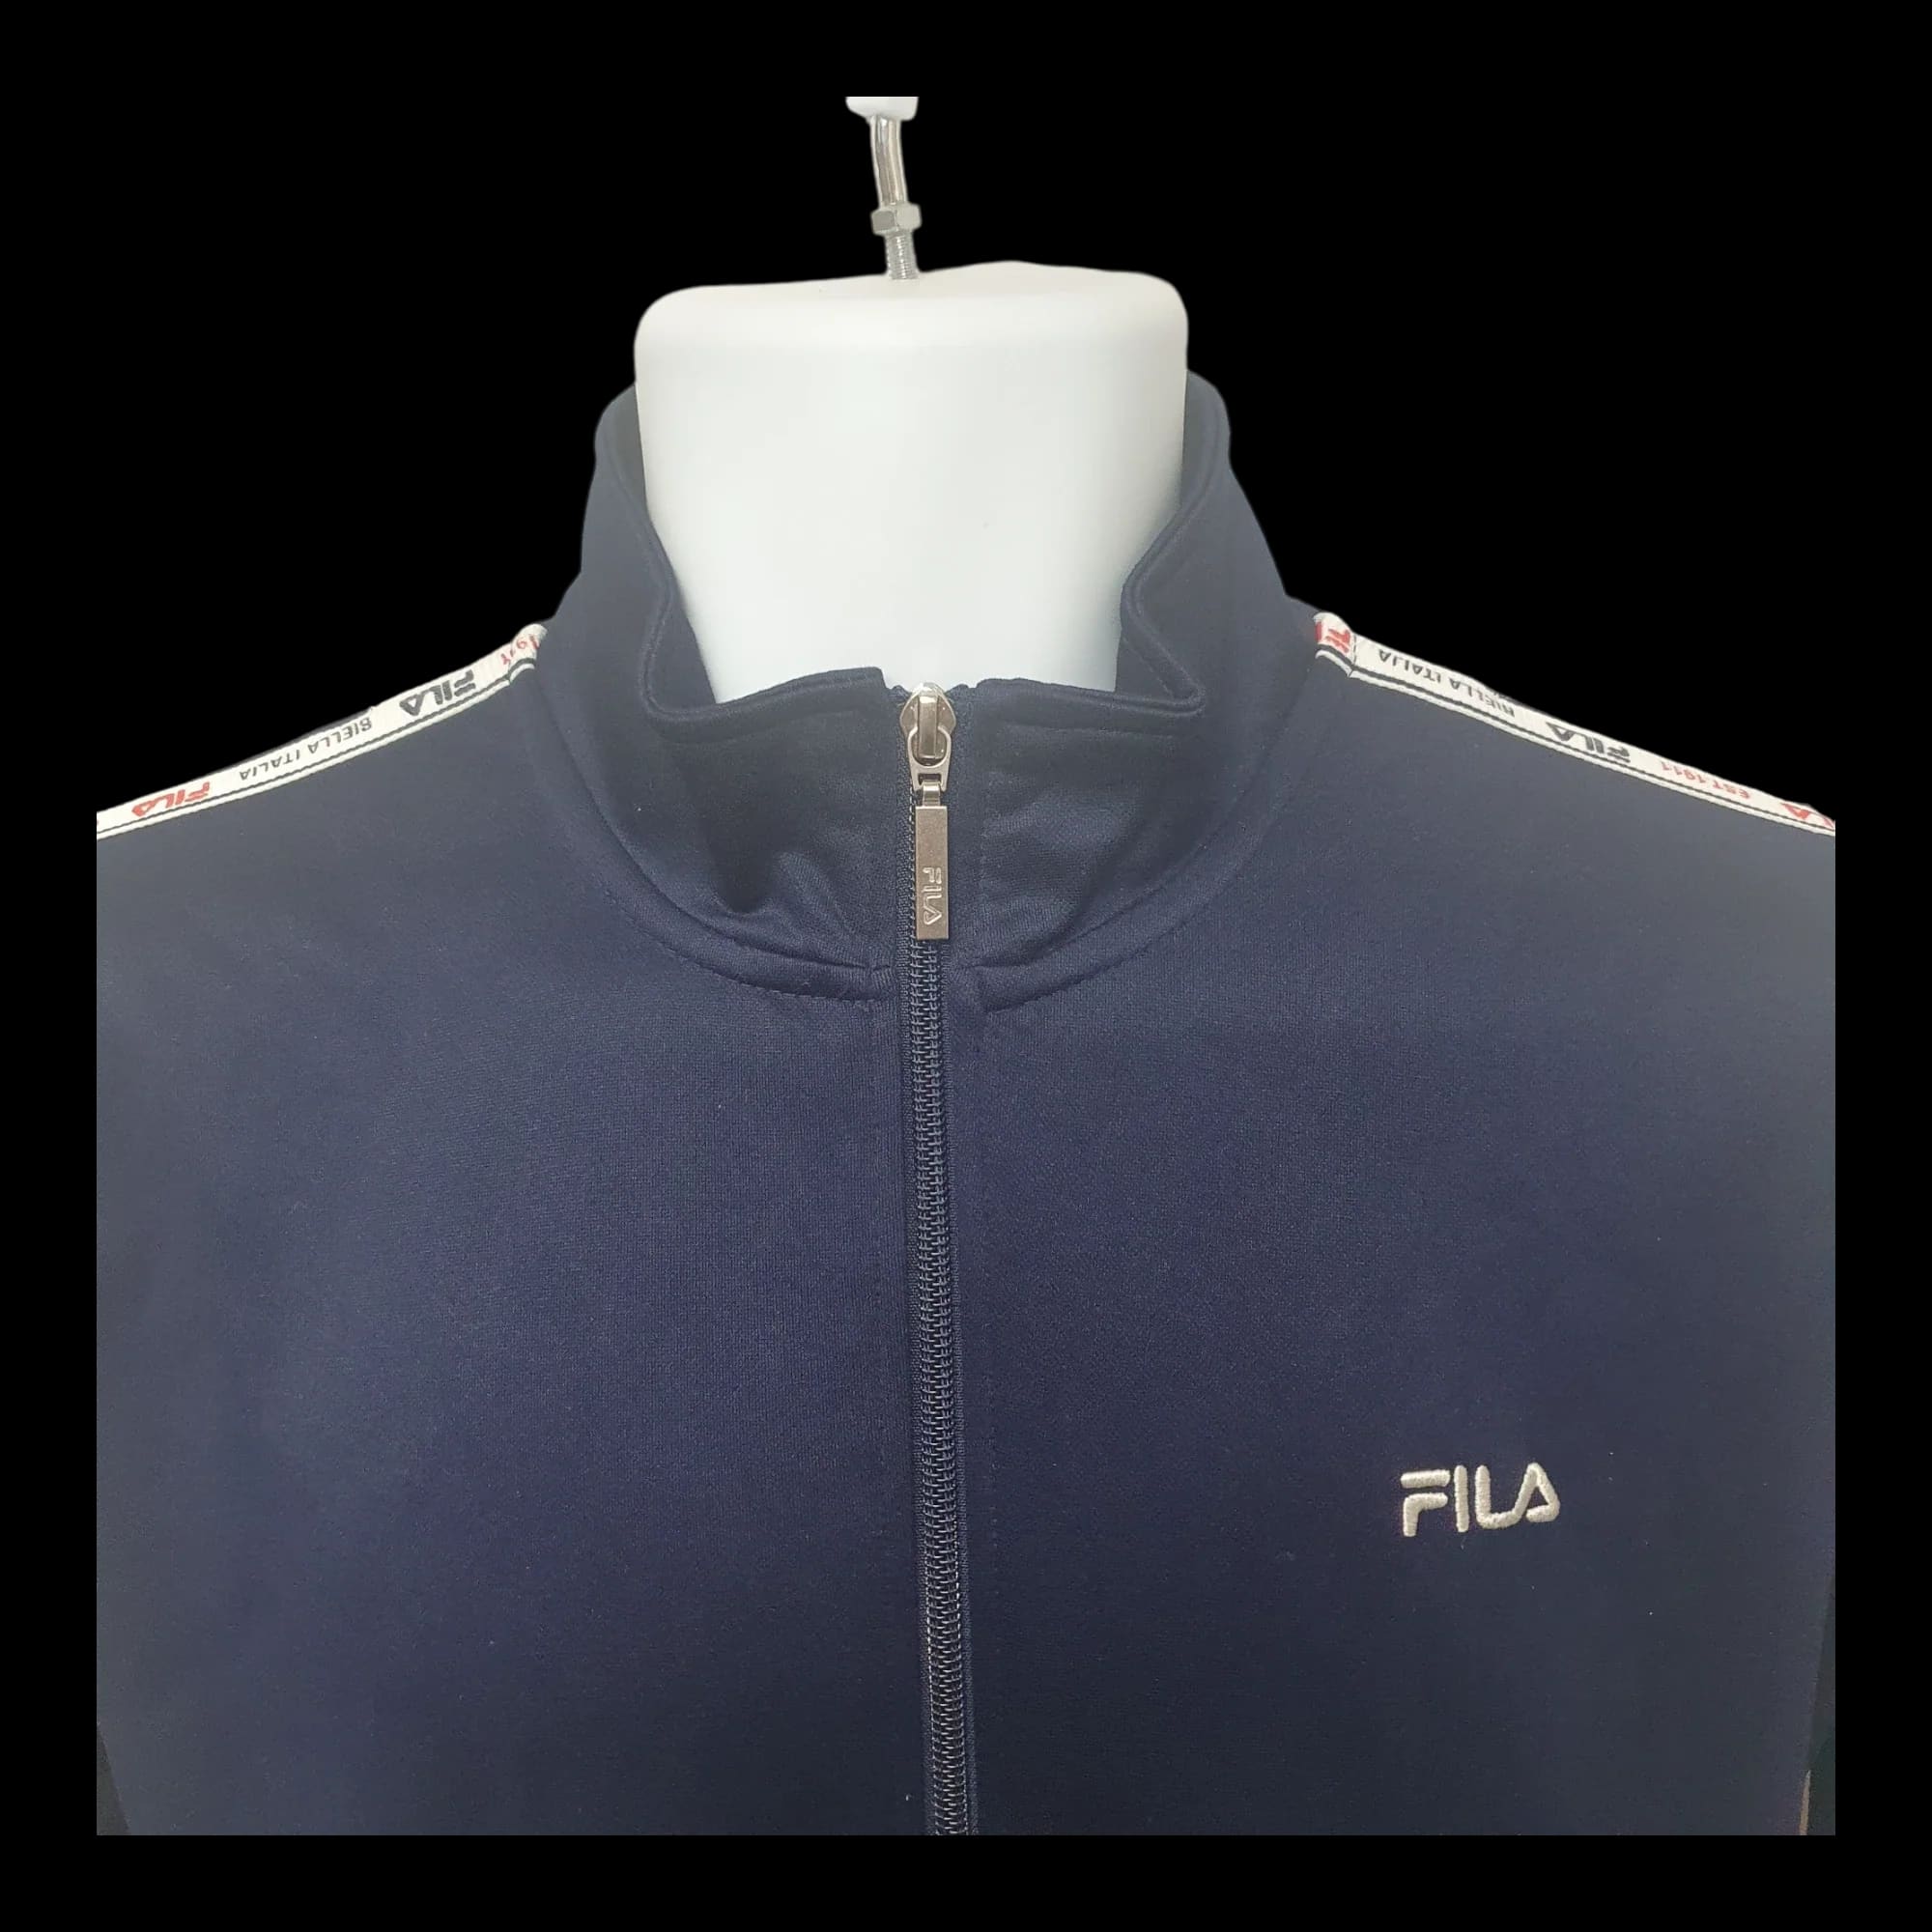 Fila Biella Italia Mens Track Top Tracksuit Jacket Full Zip